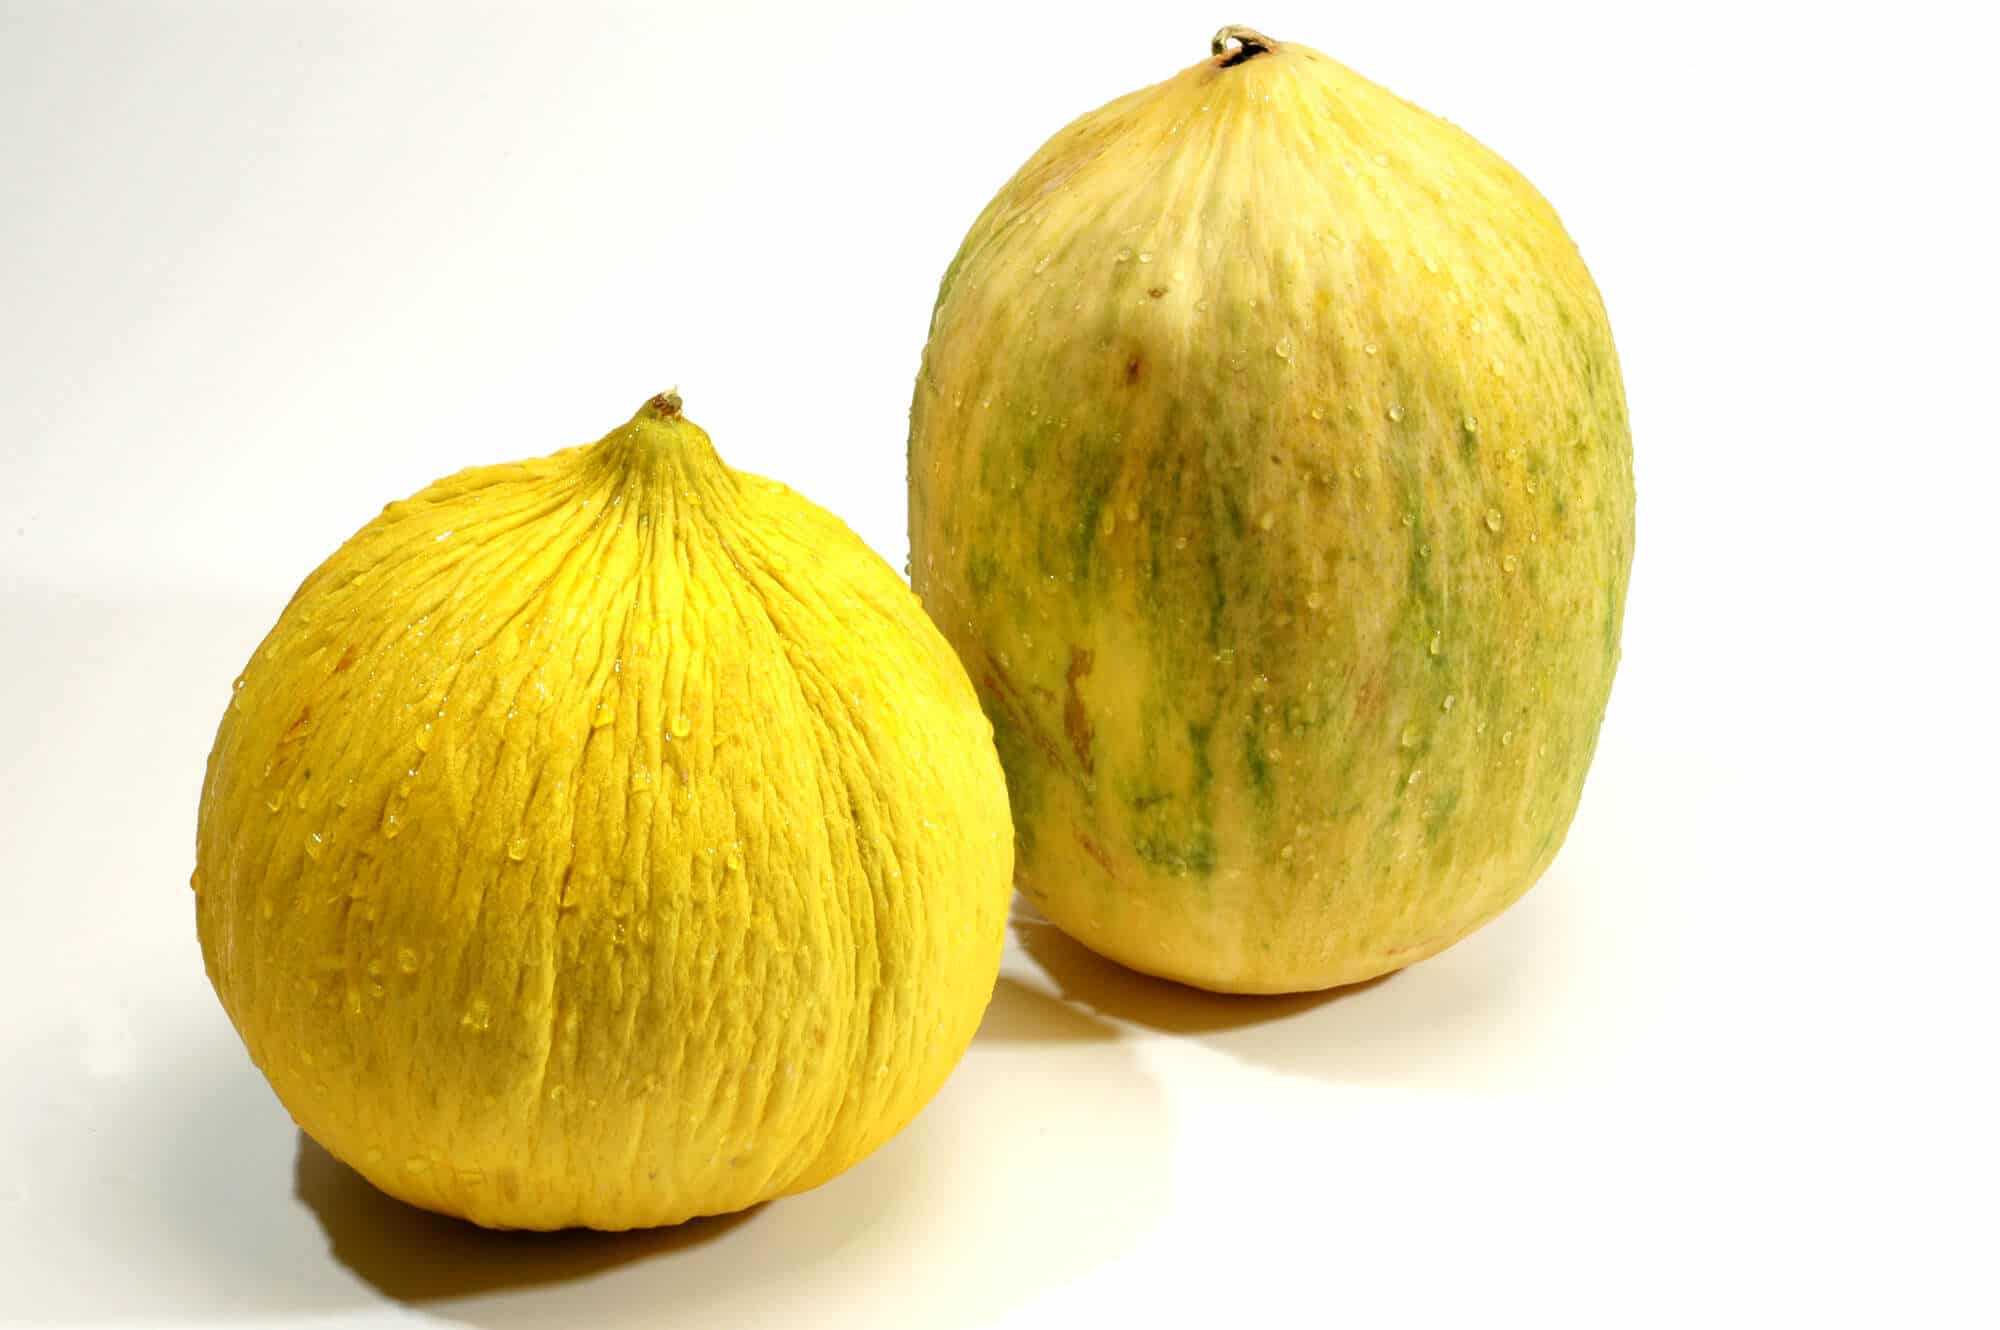 crenshaw-melon-9299370